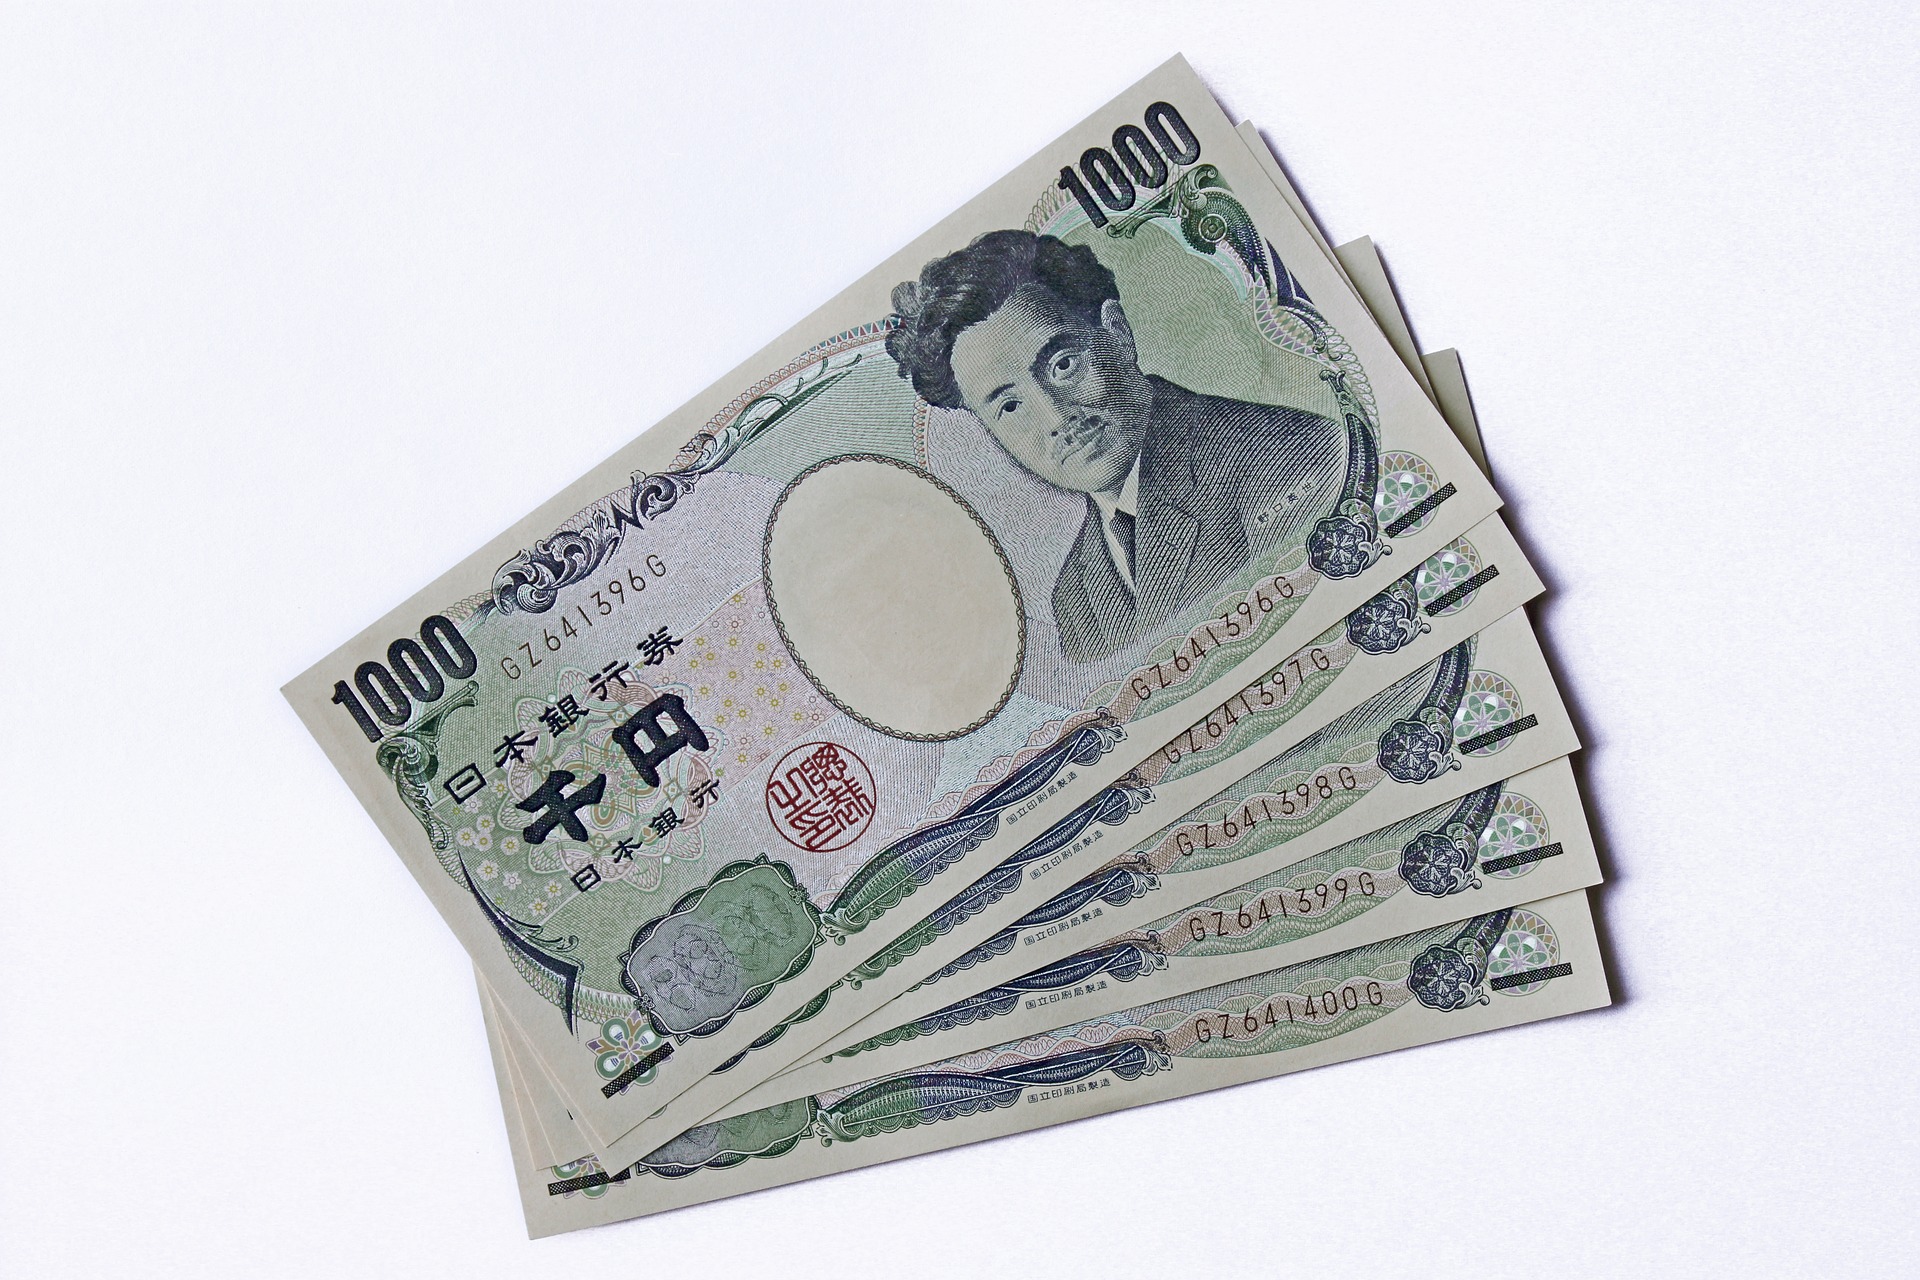 Indonesia issues Japanese yen bonds worth 920.4 mln USD